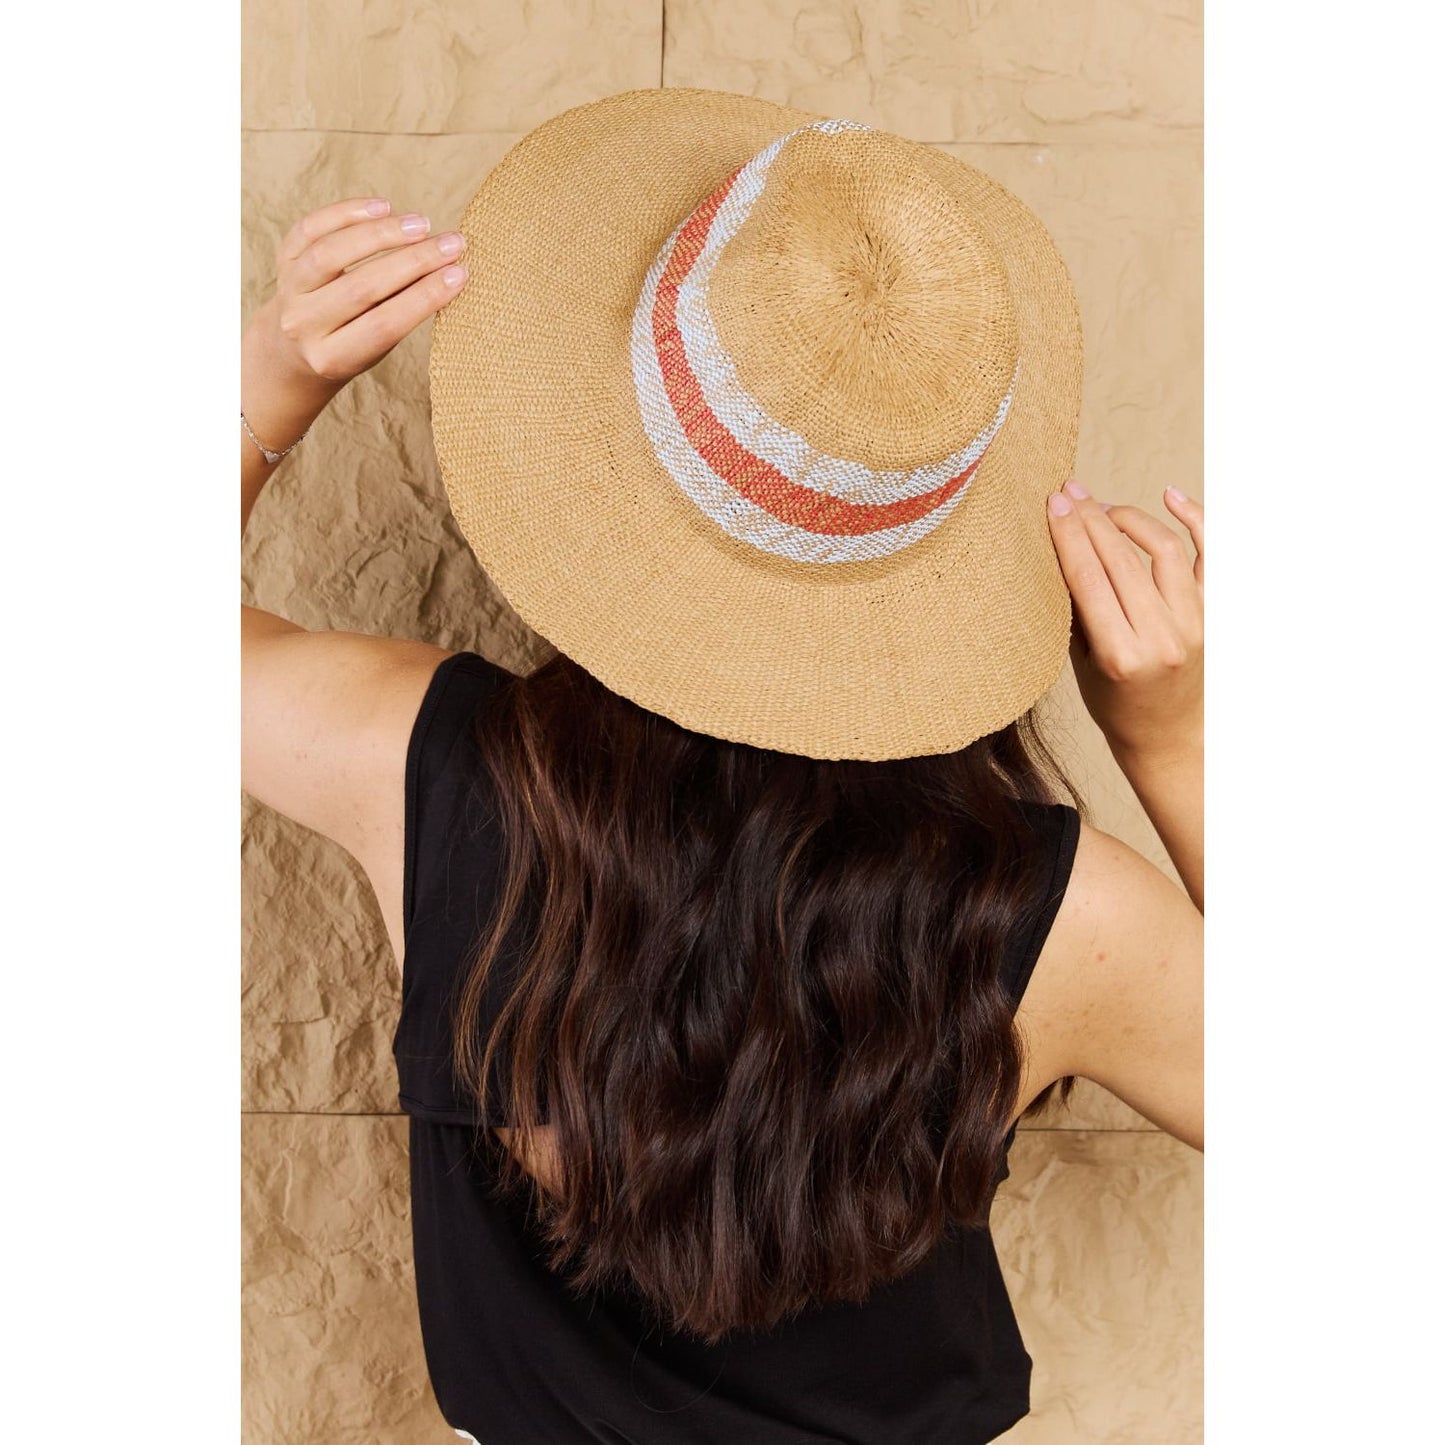 Fame Protect Me Vivid Glow Straw Sun Hat - TiffanyzKlozet